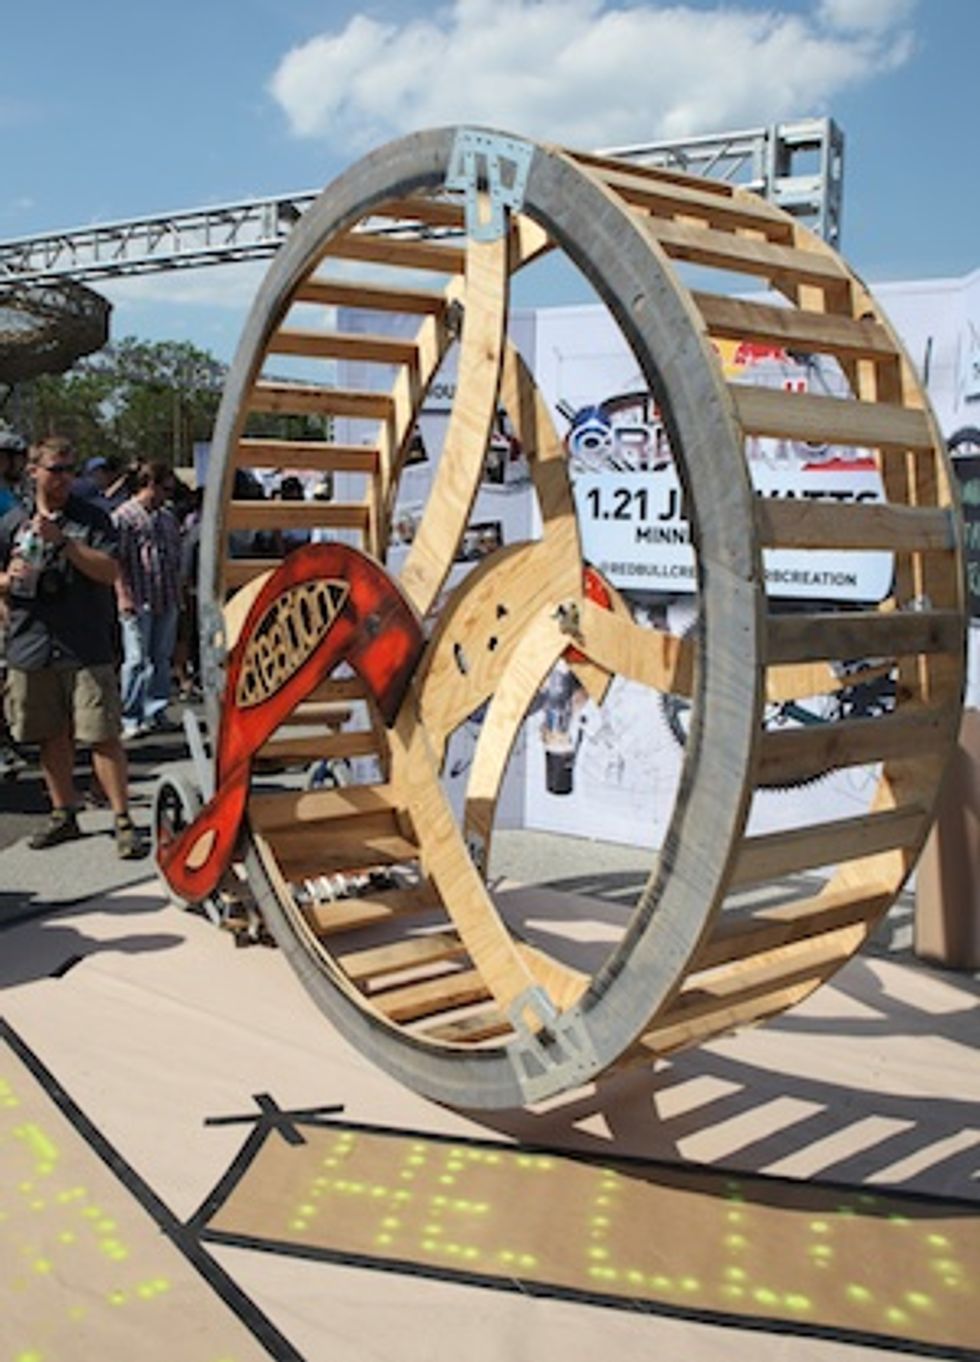 1.21 Jigawatts built a human-sized wheel that printed words